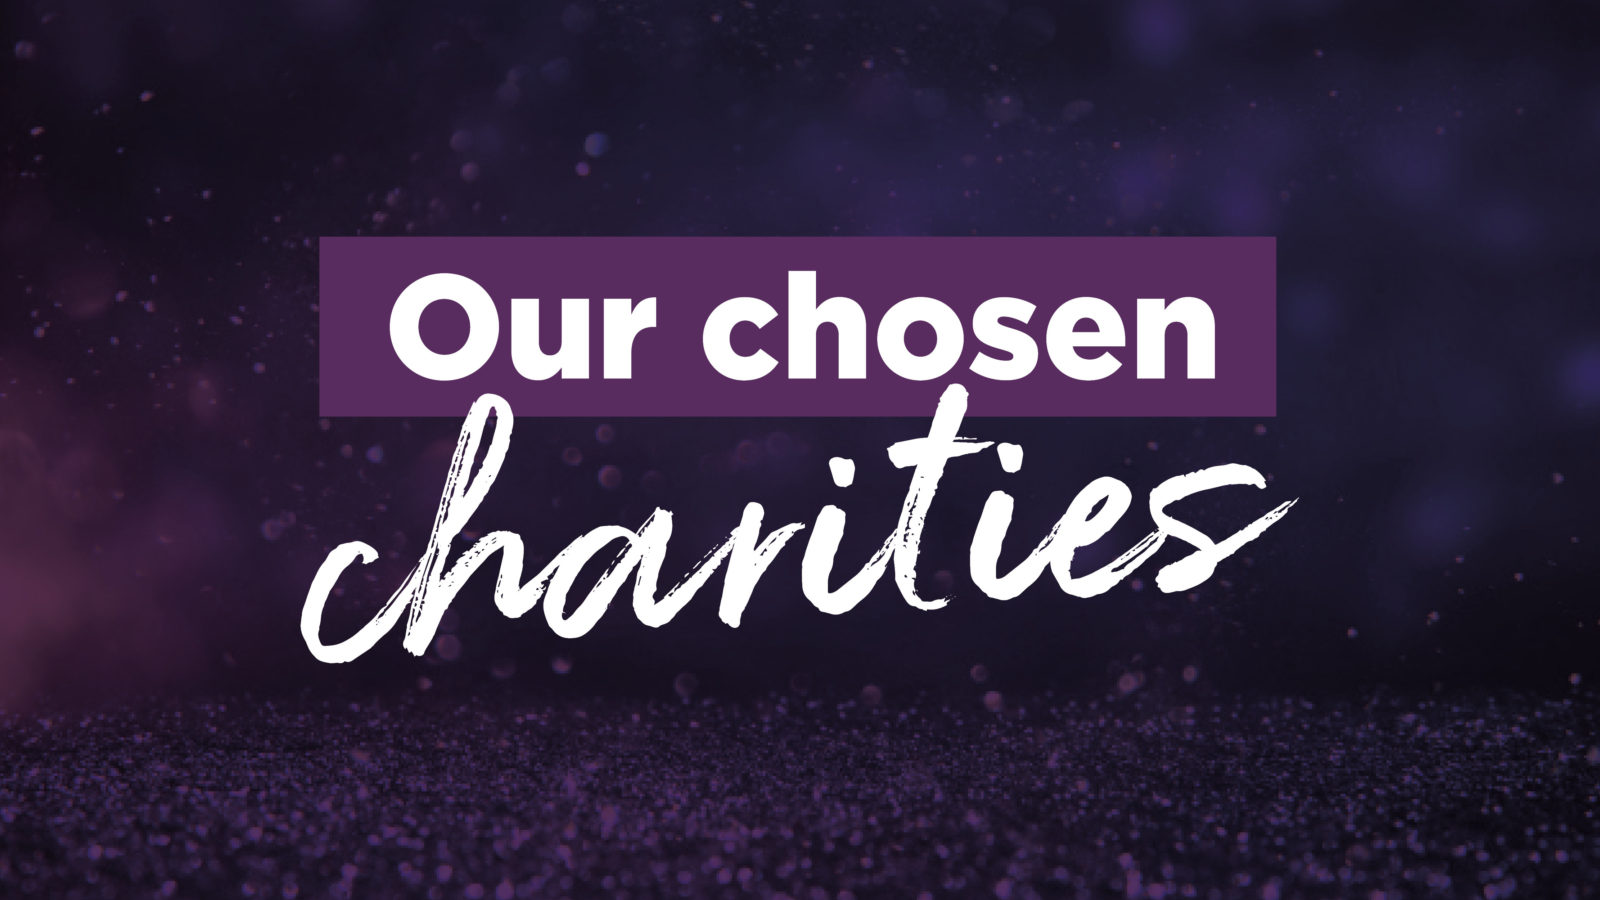 Our Chosen Charities webtile